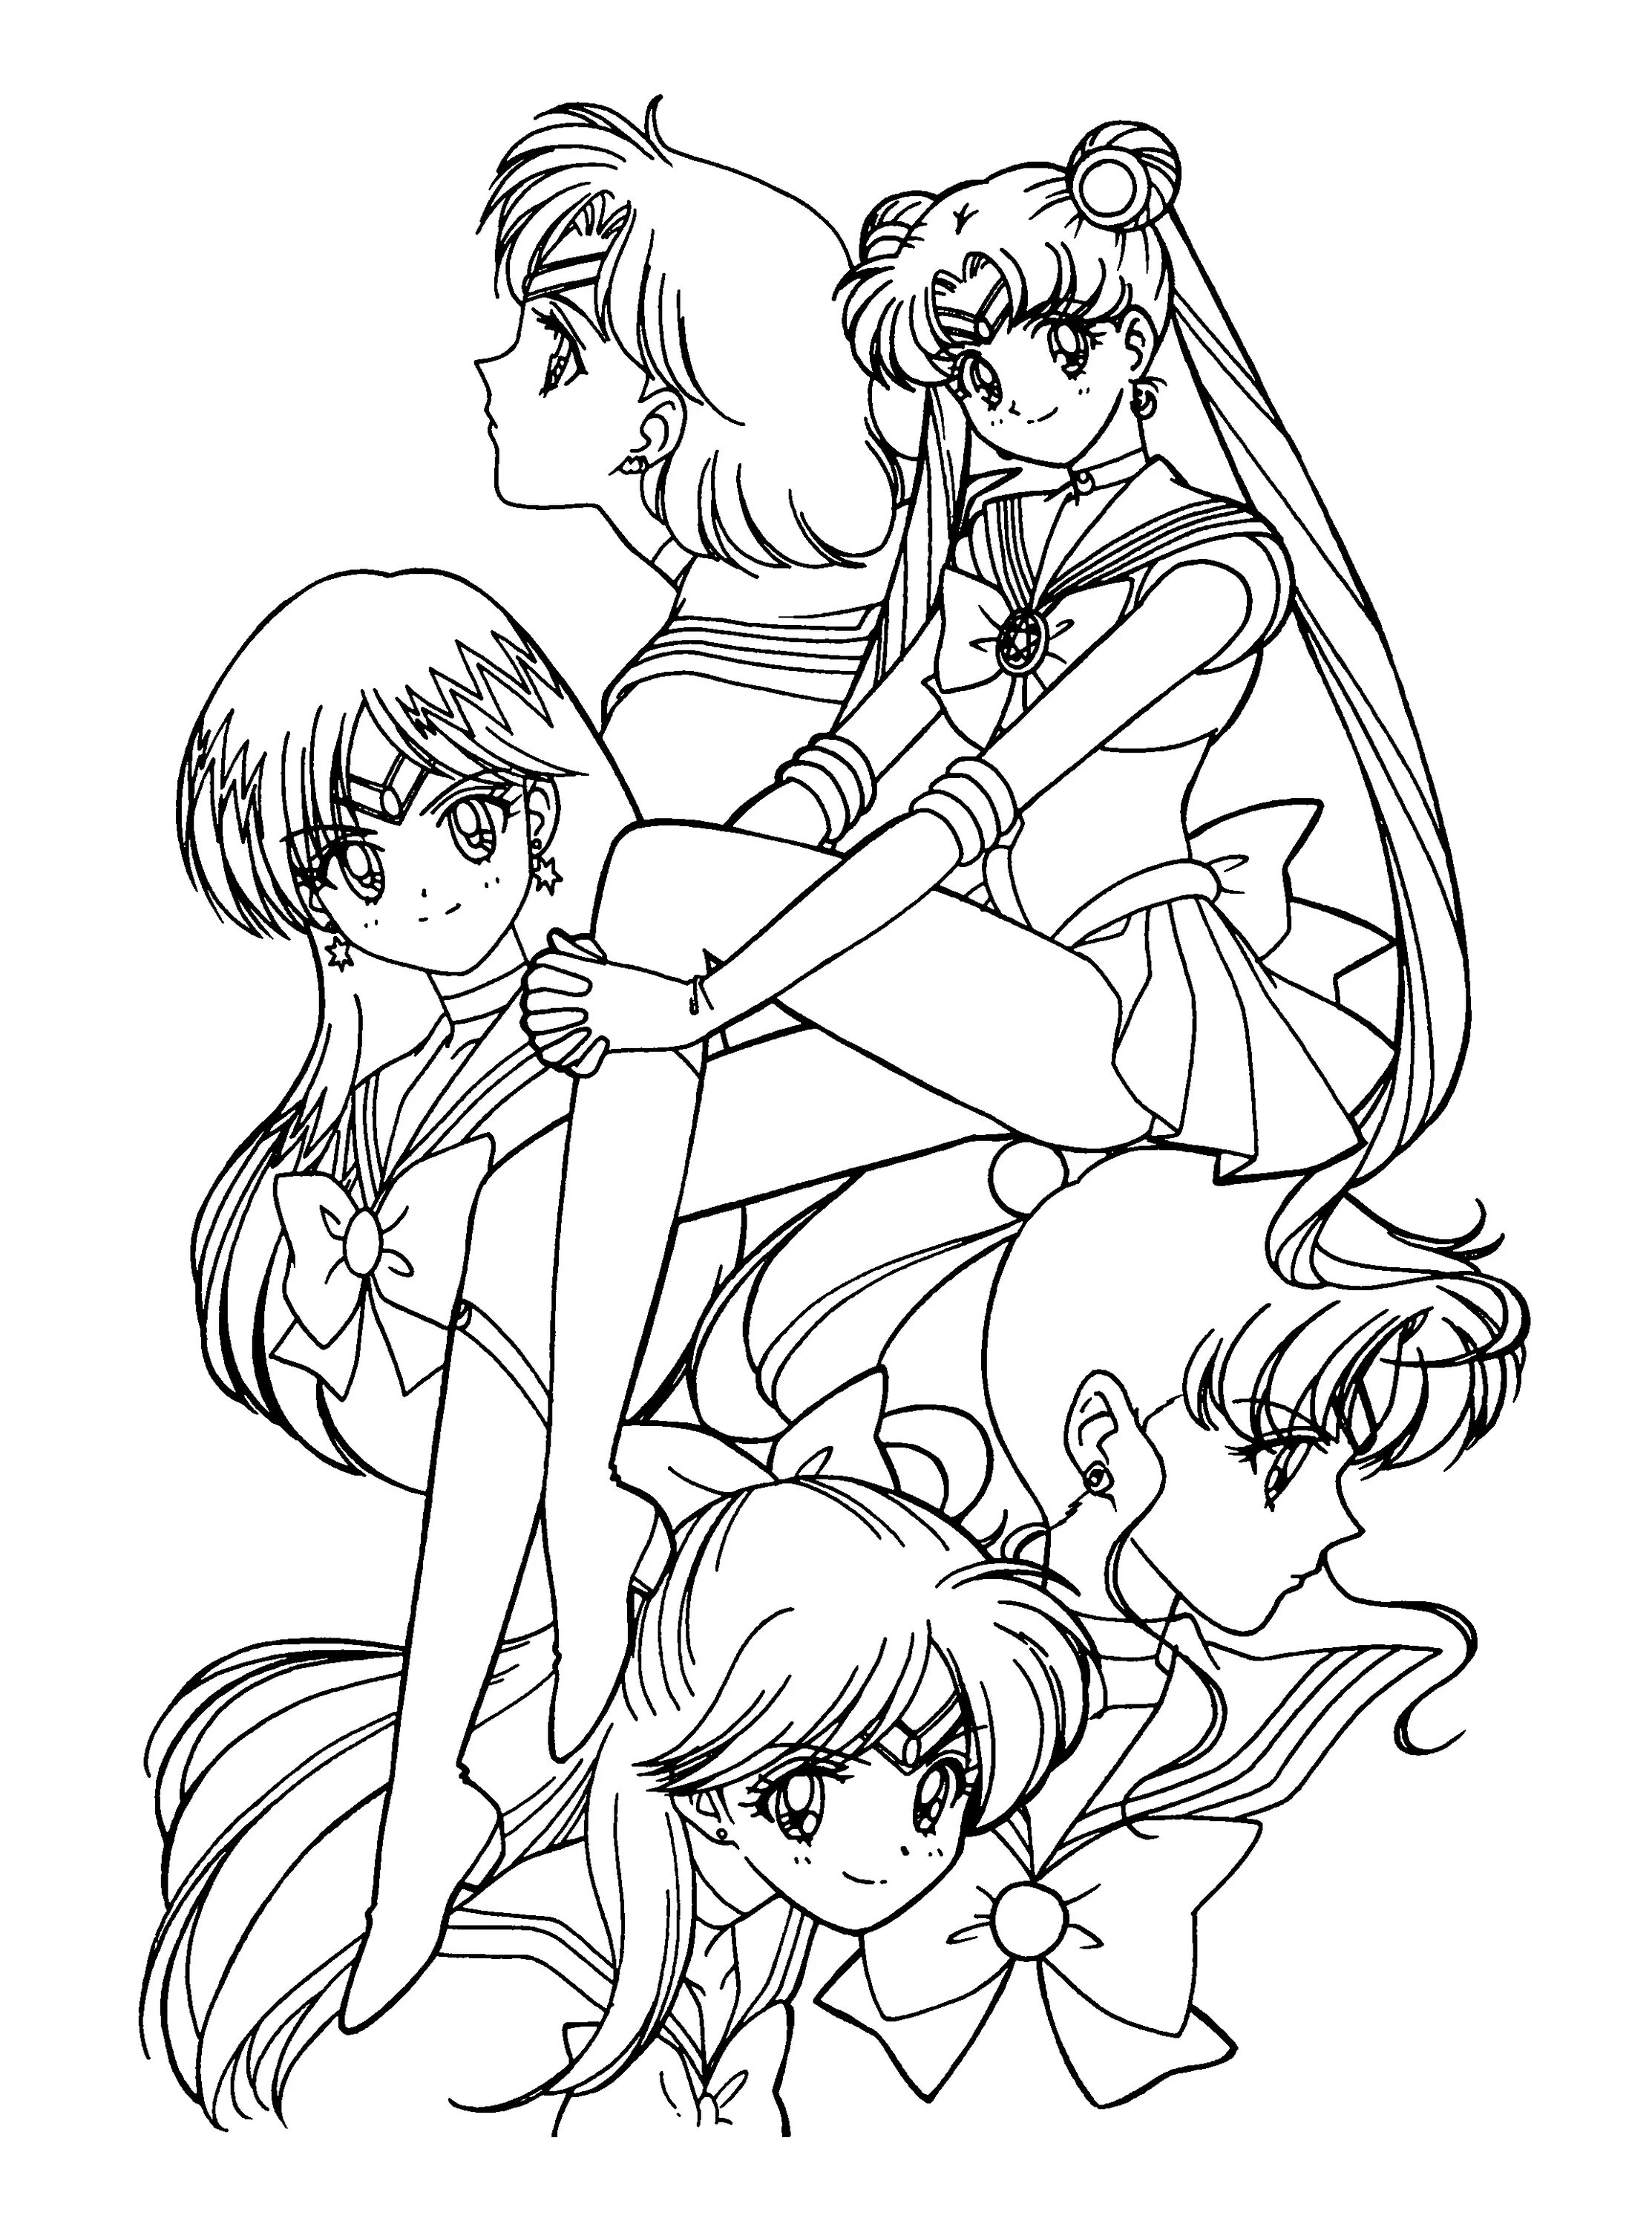 Sailor moon #2